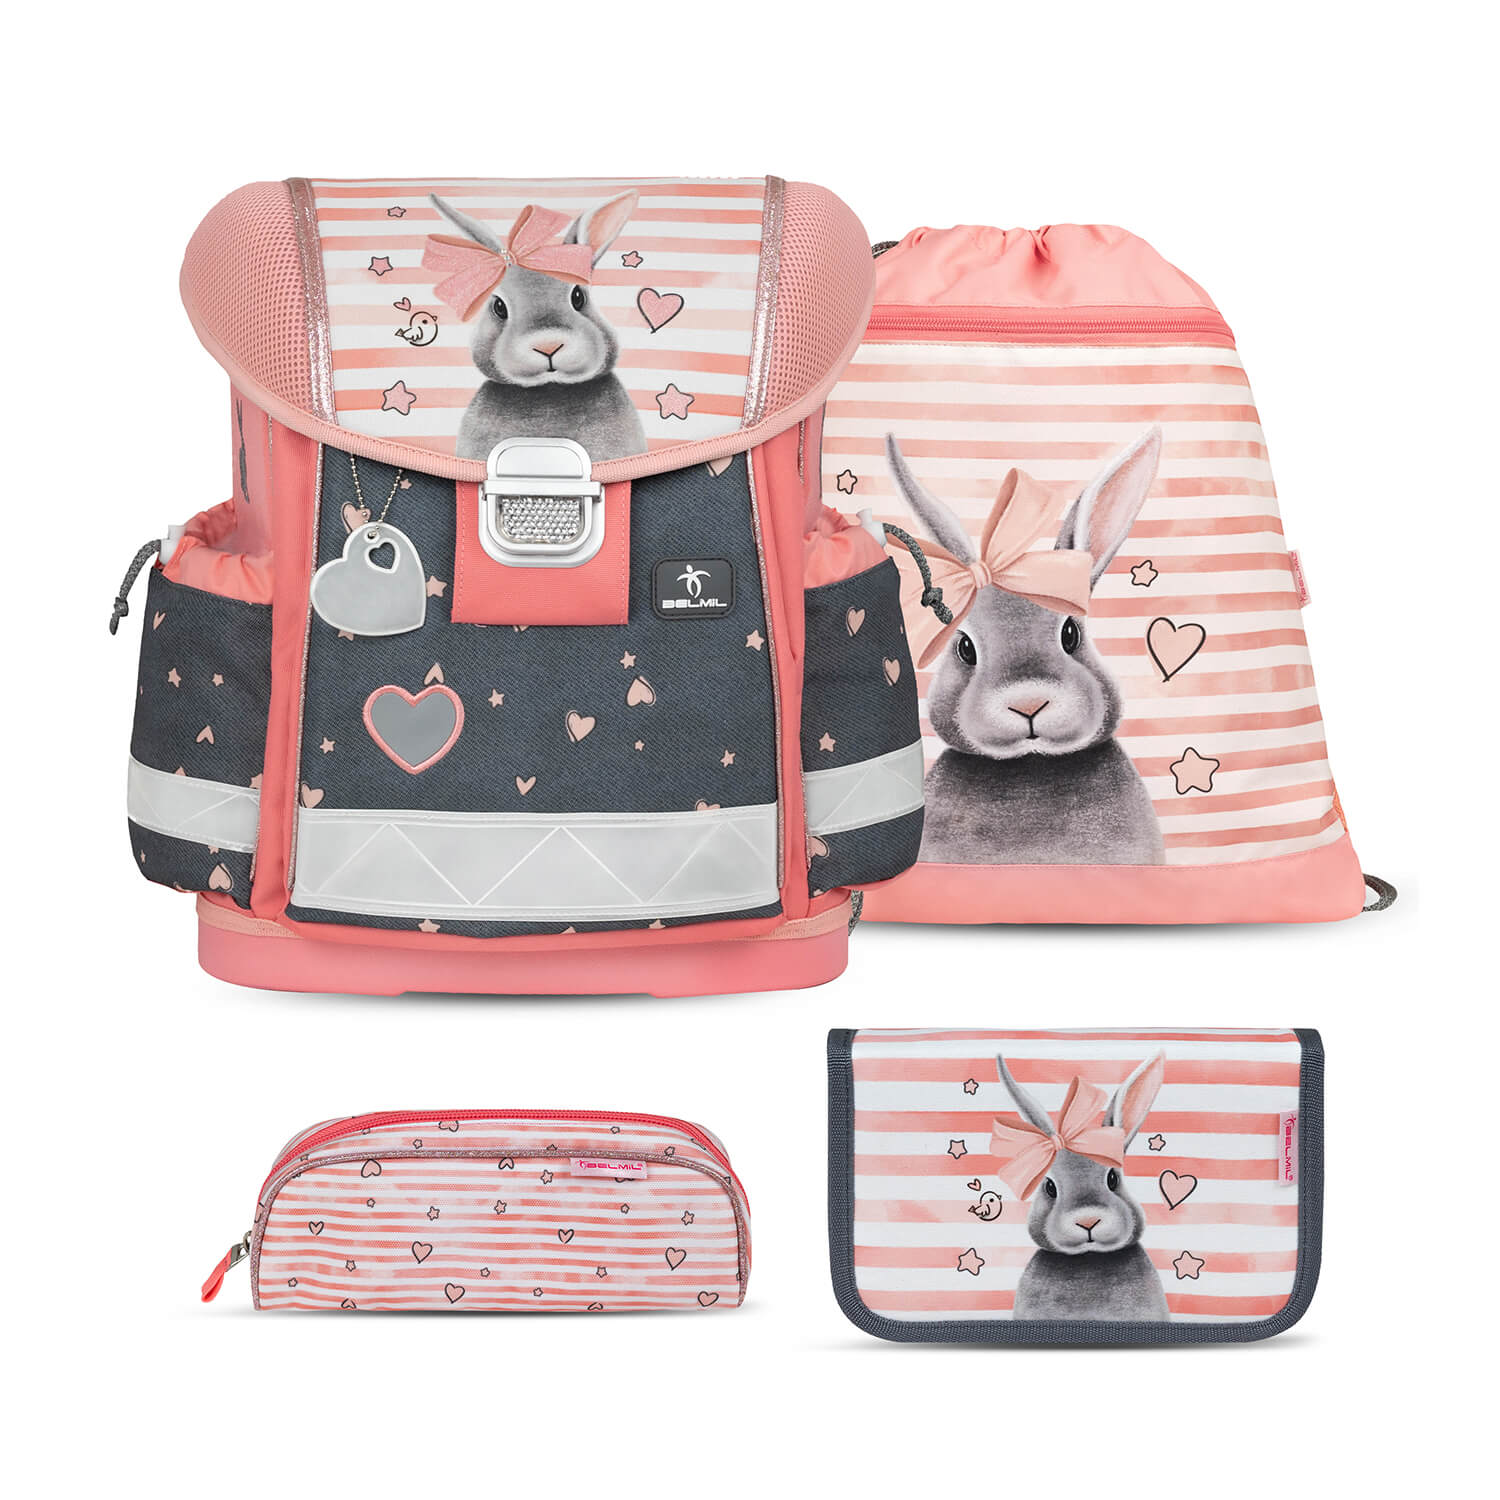 Classy Little Bunnies schoolbag set 4 pcs